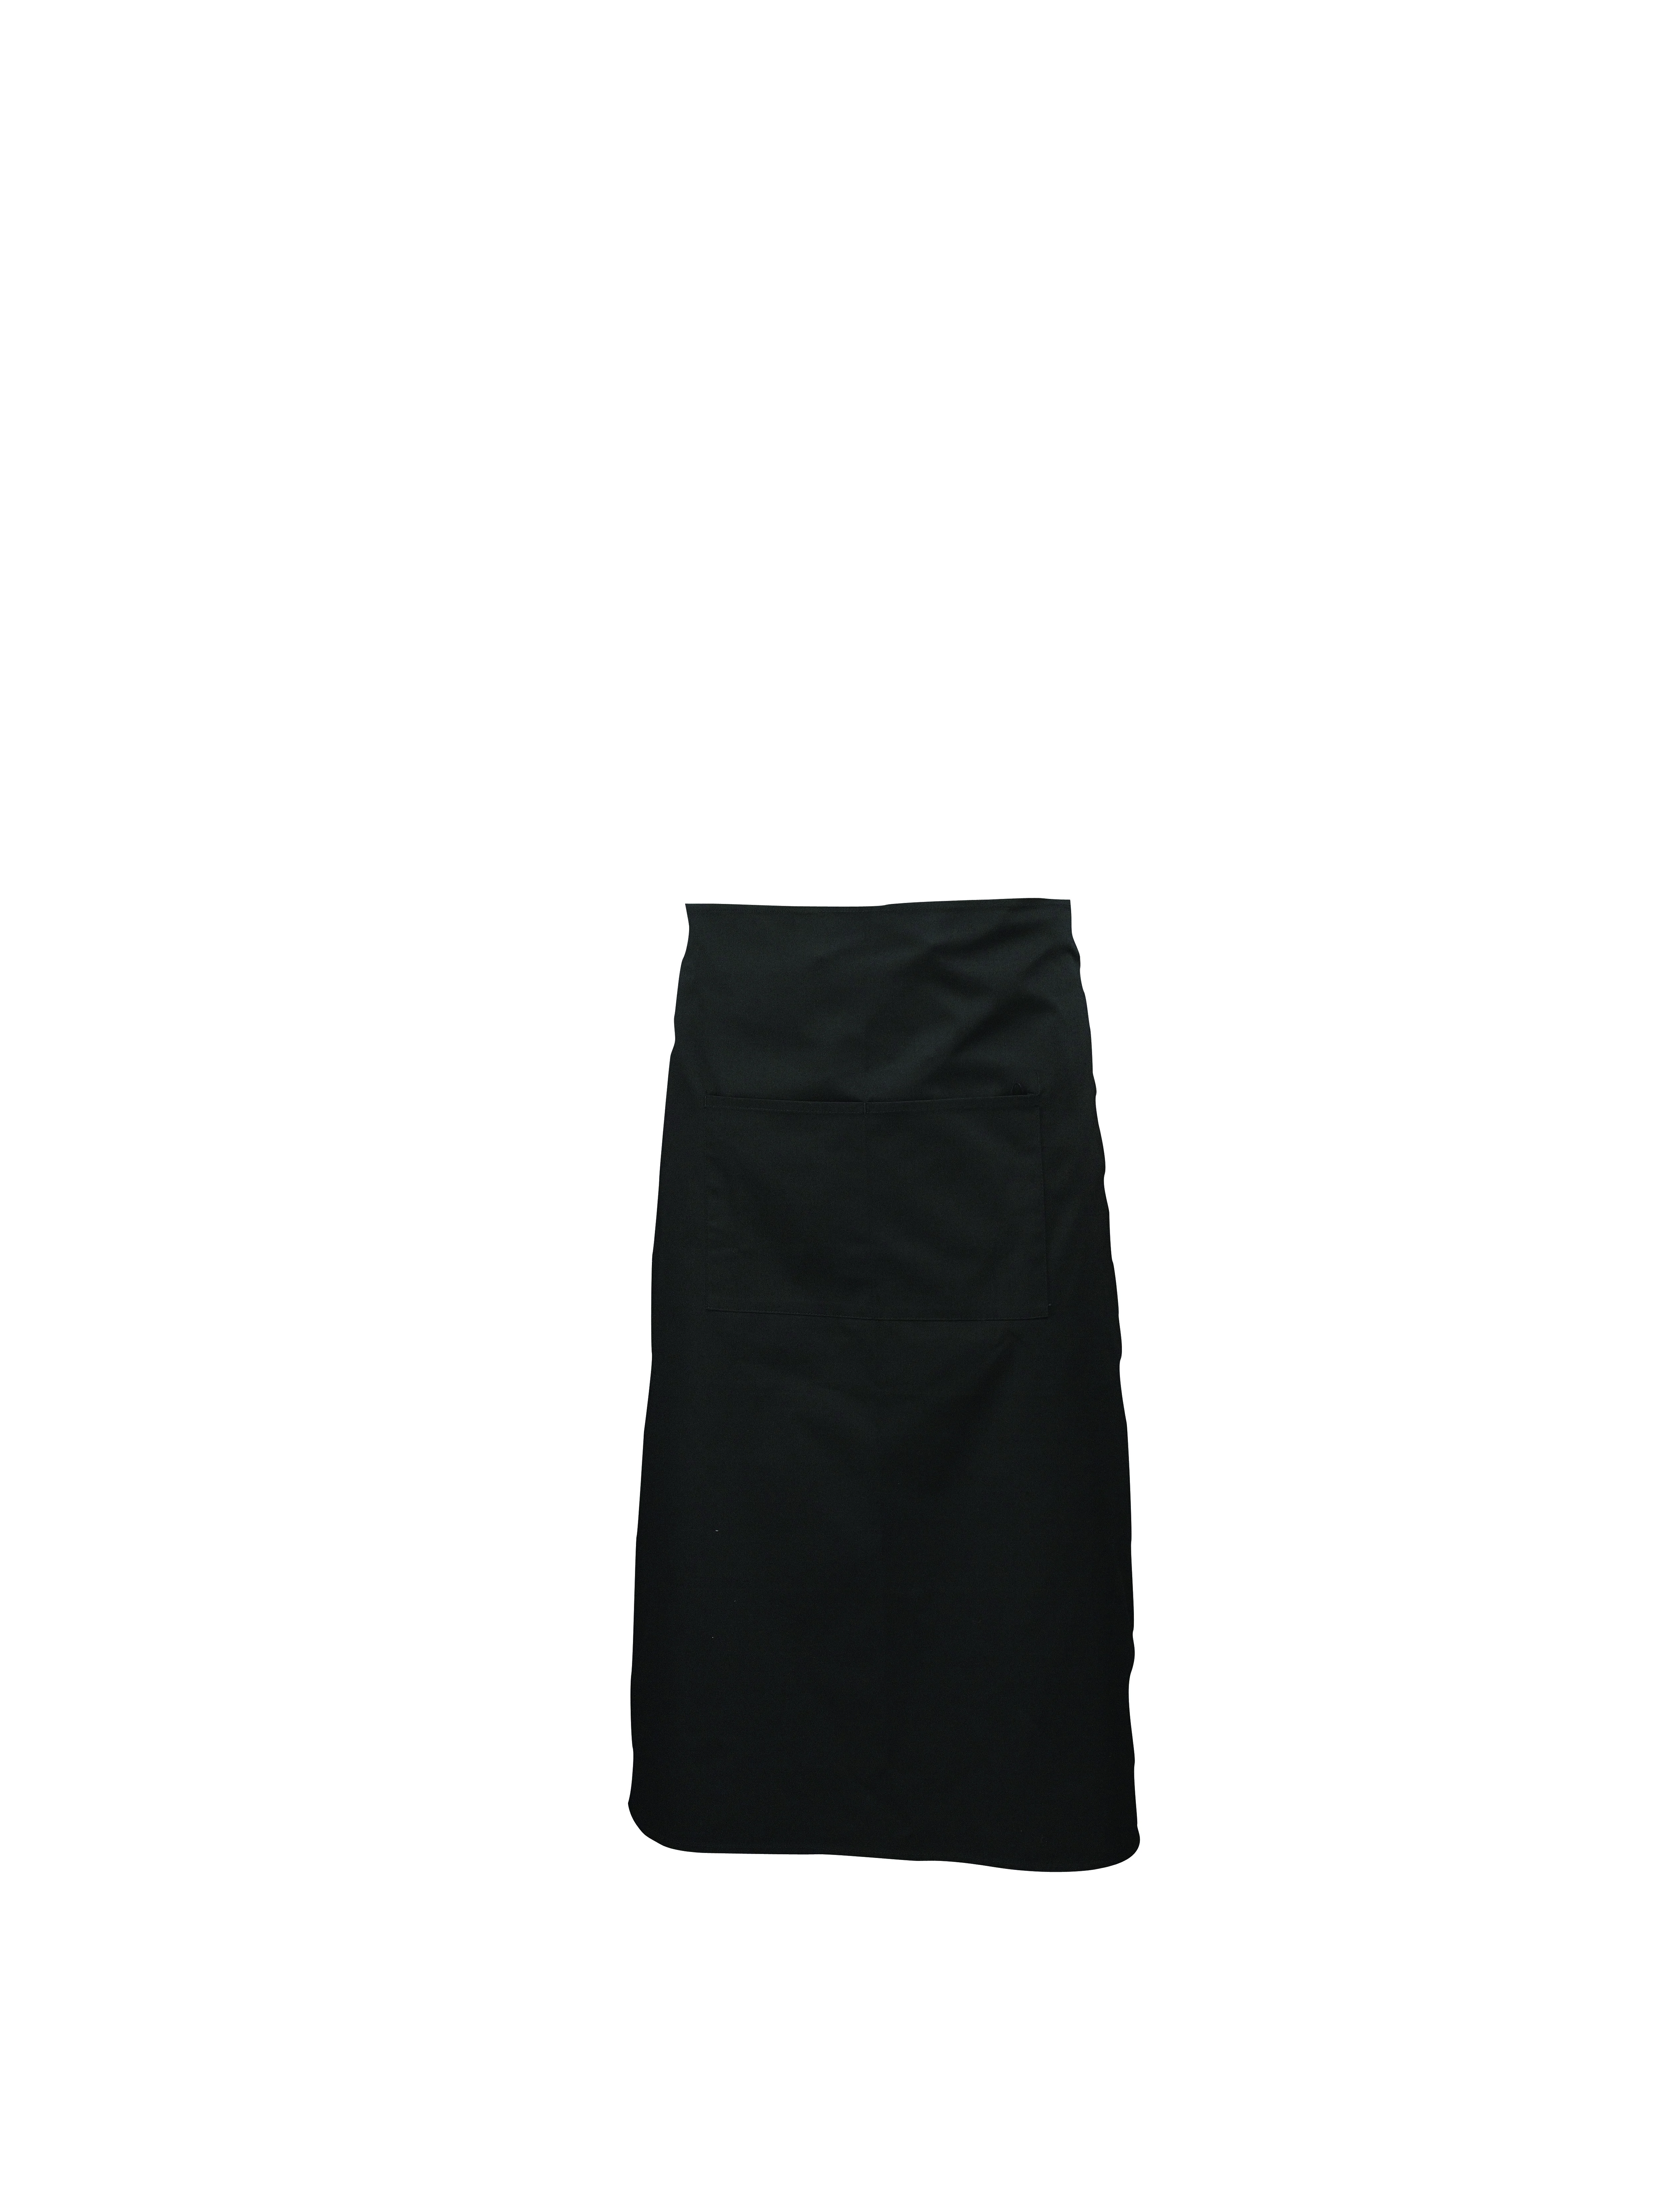 Black Waist Apron W/ Split Pocket 70cm Long